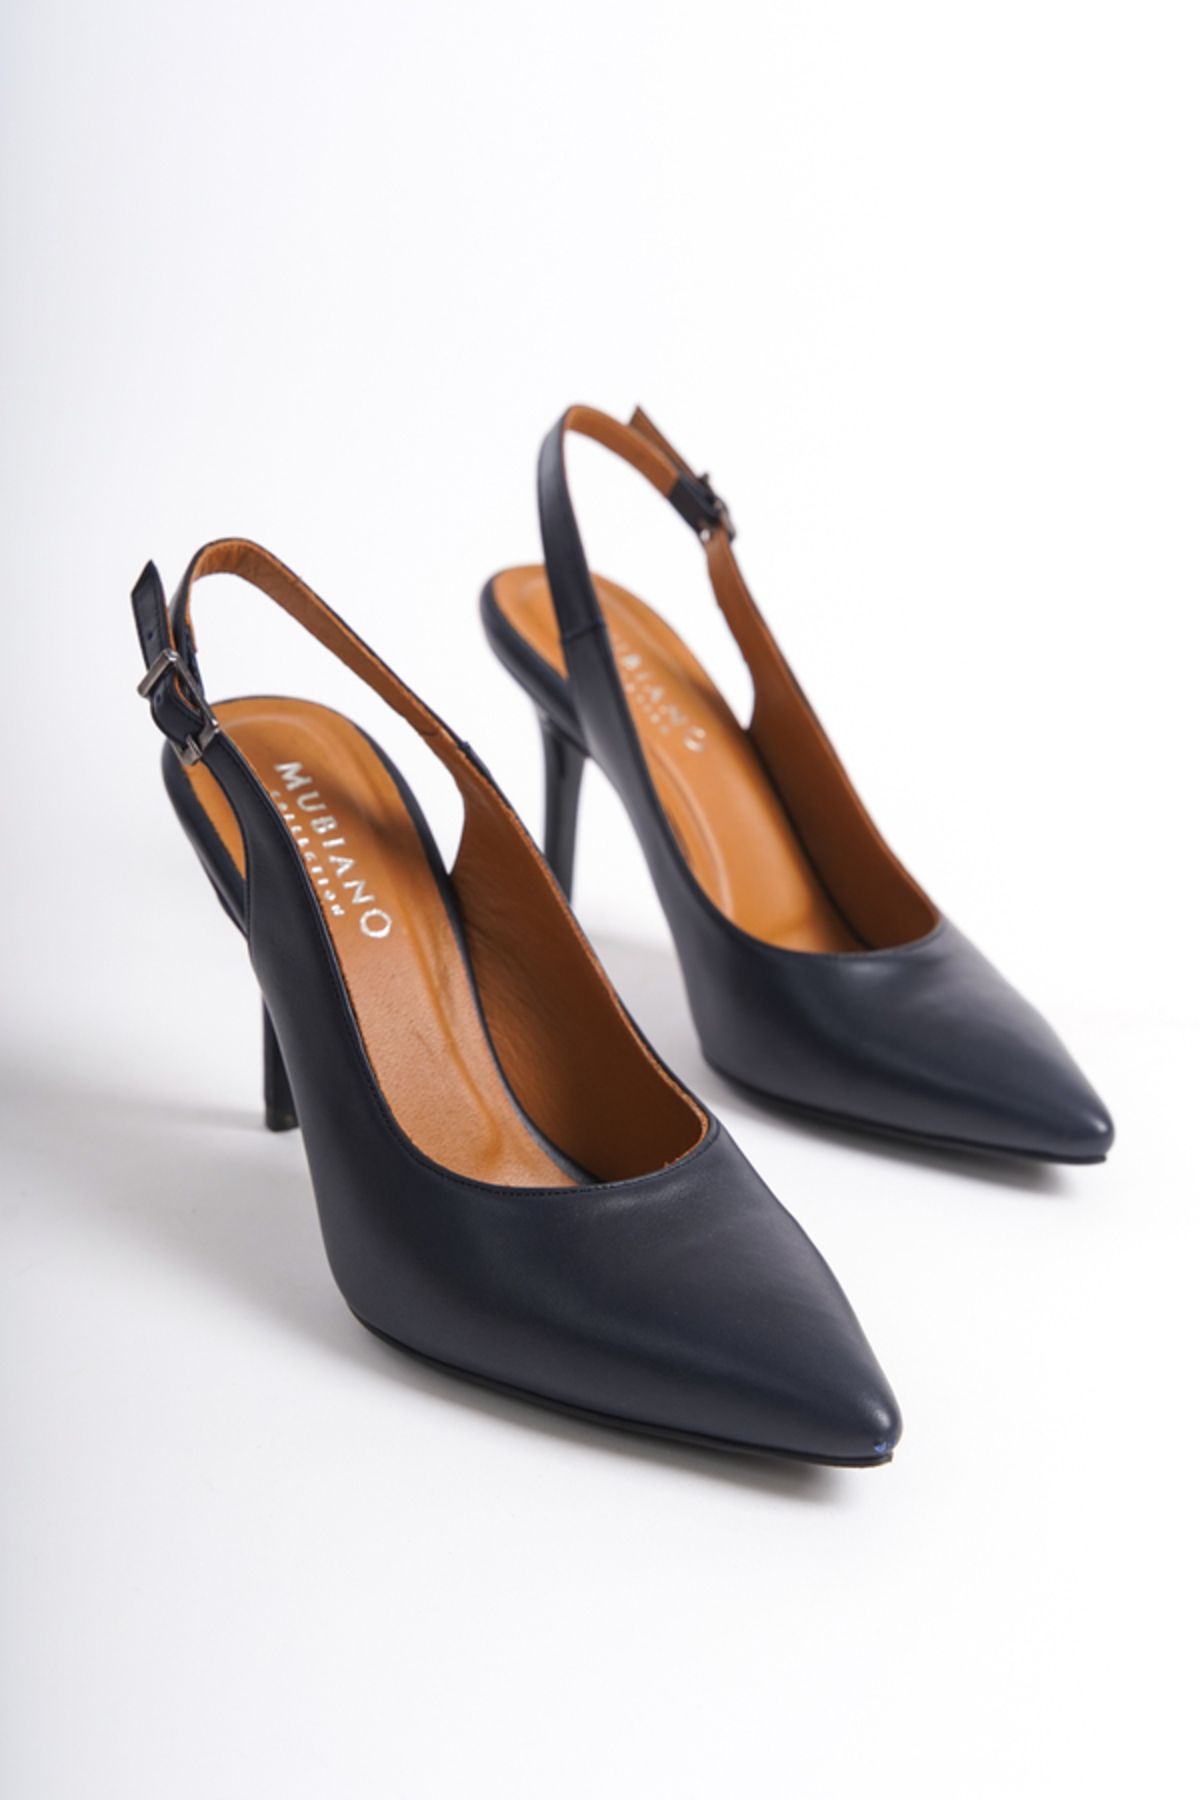 Mubiano Collection Kadın Topuklu Deri Stiletto & Ayakkabı Lacivert -MCALM433-LCV